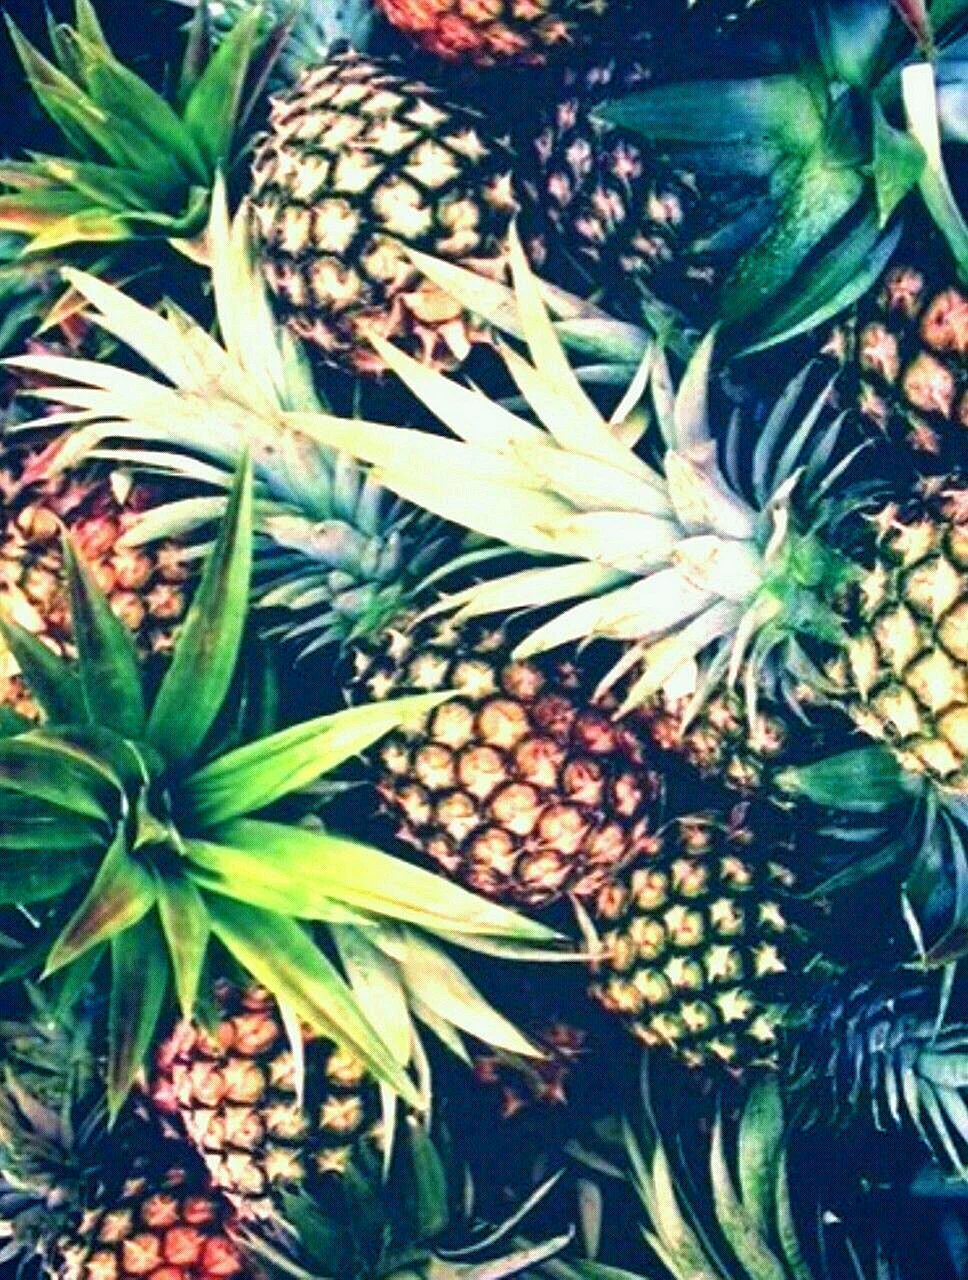 Pineapple Aesthetic Wallpaper For iPhone